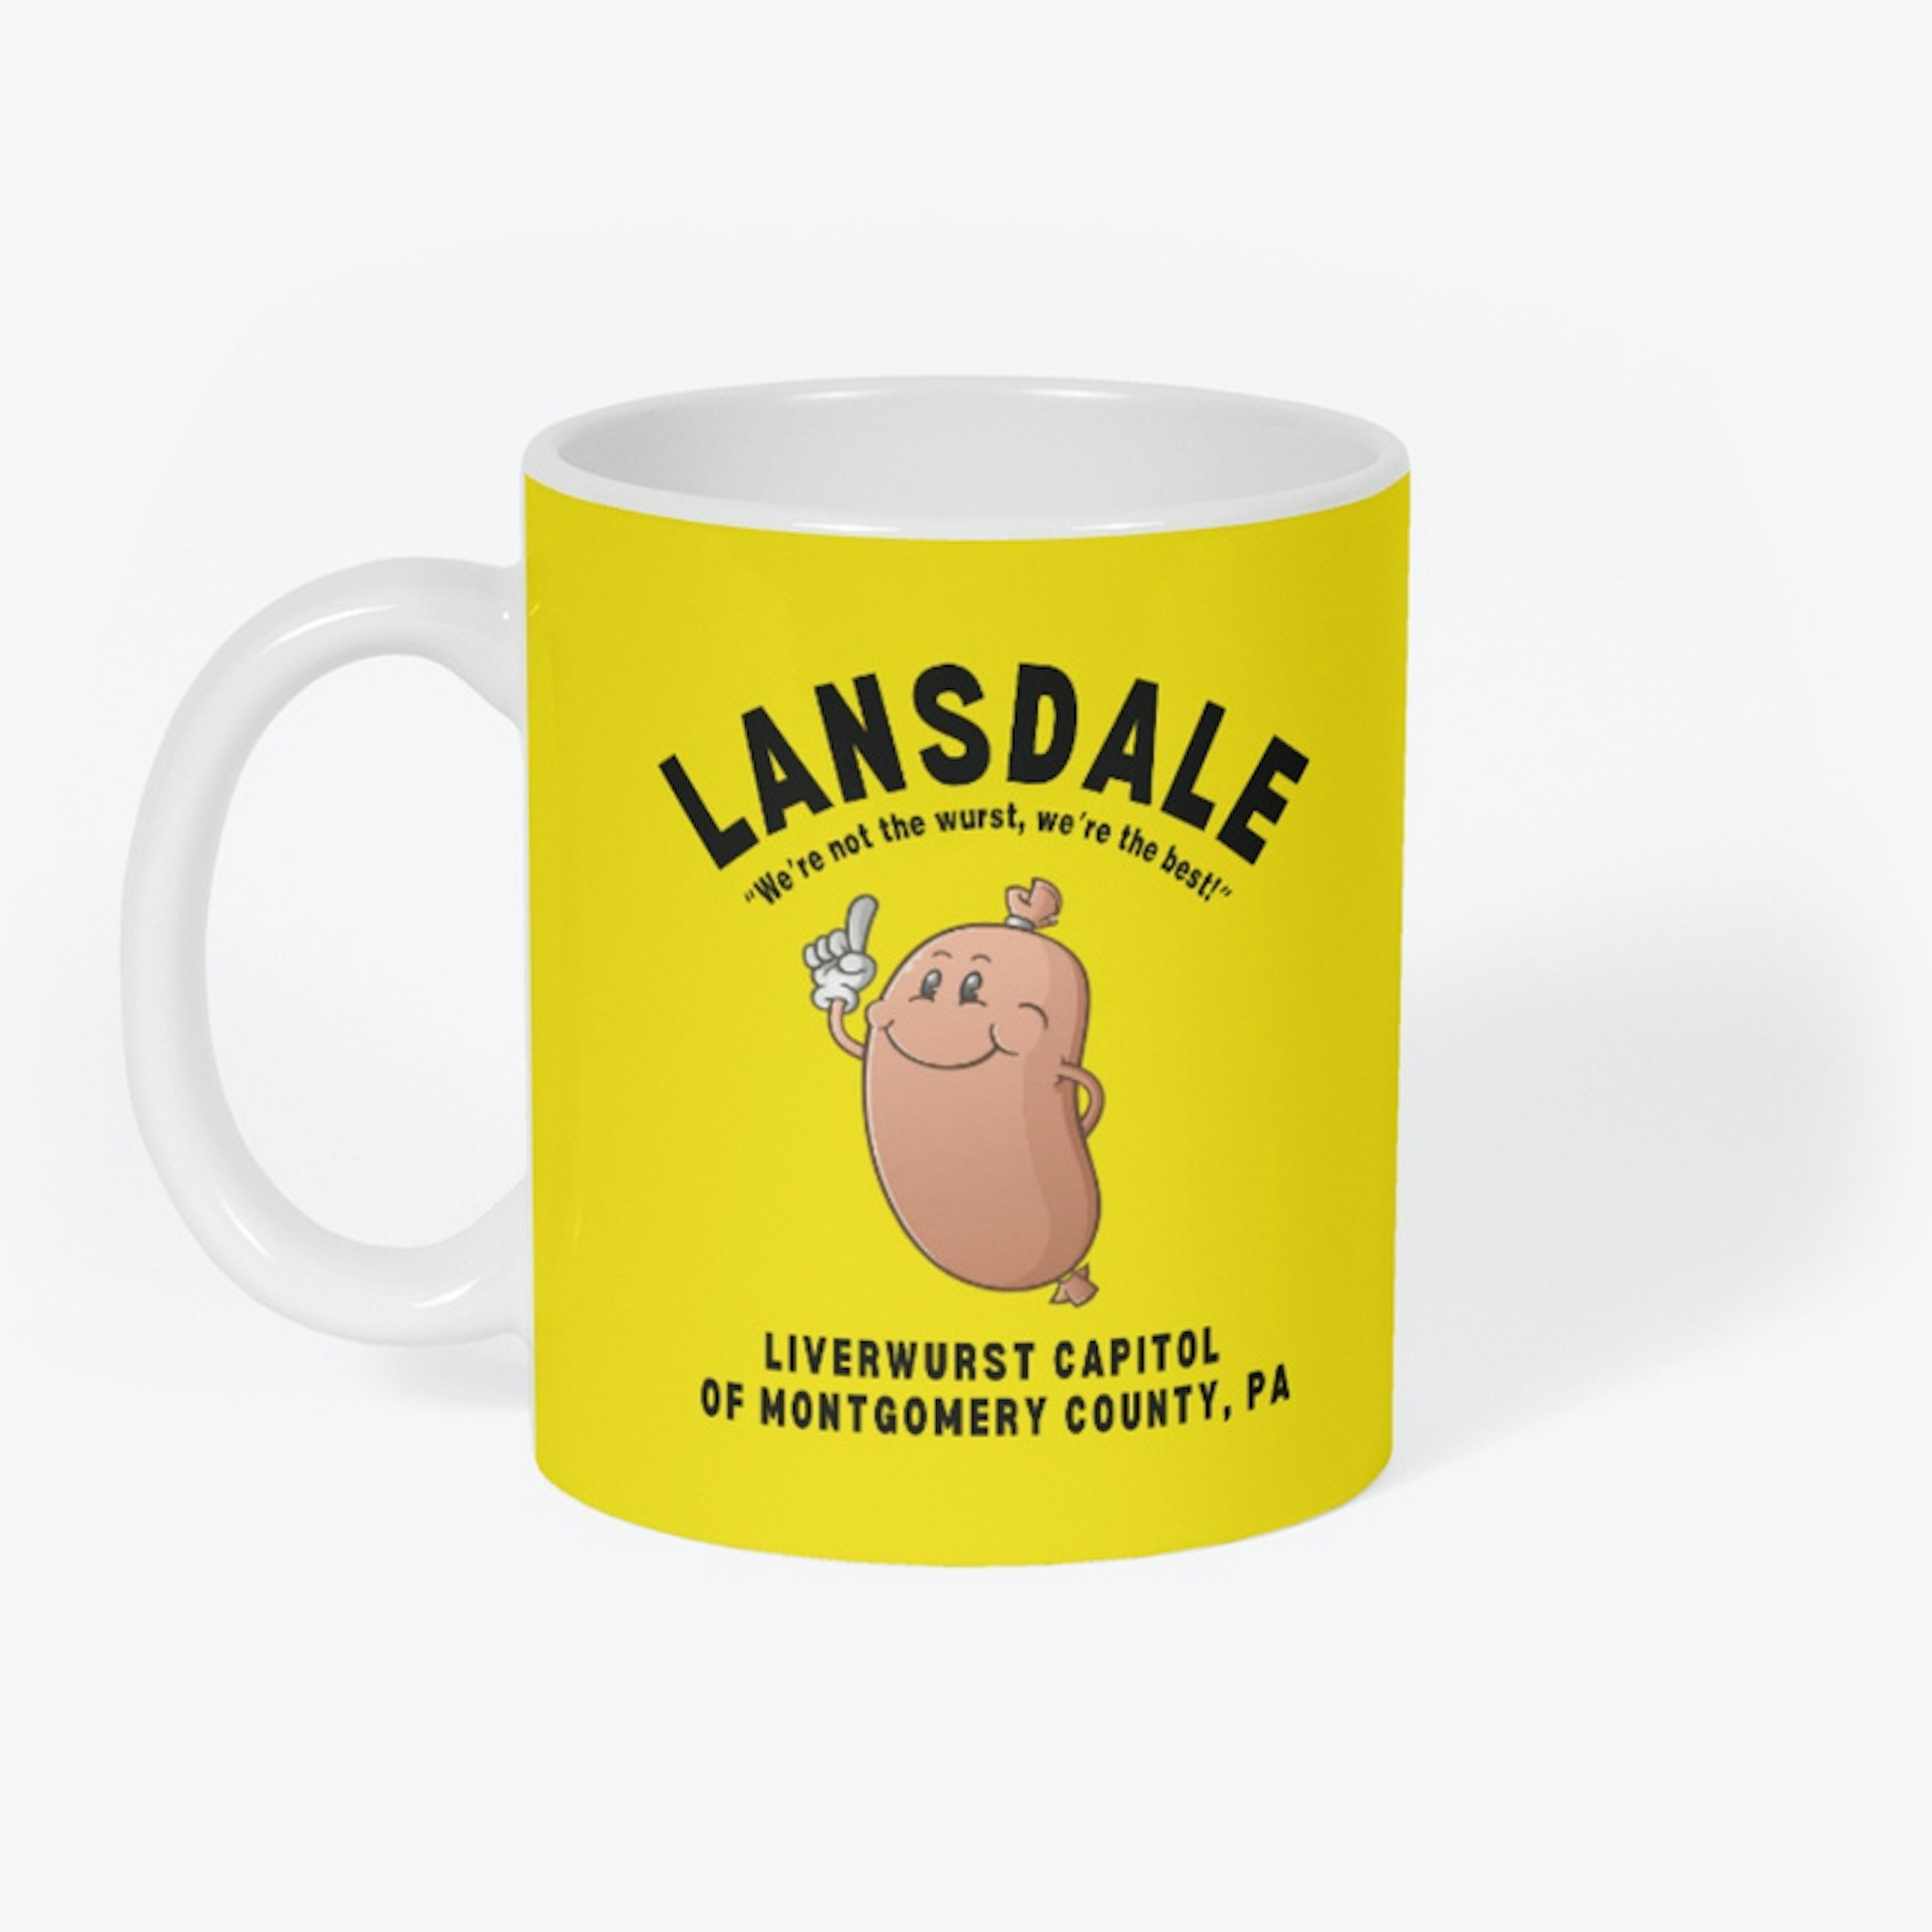 Lansdale | Liverwurst Capitol